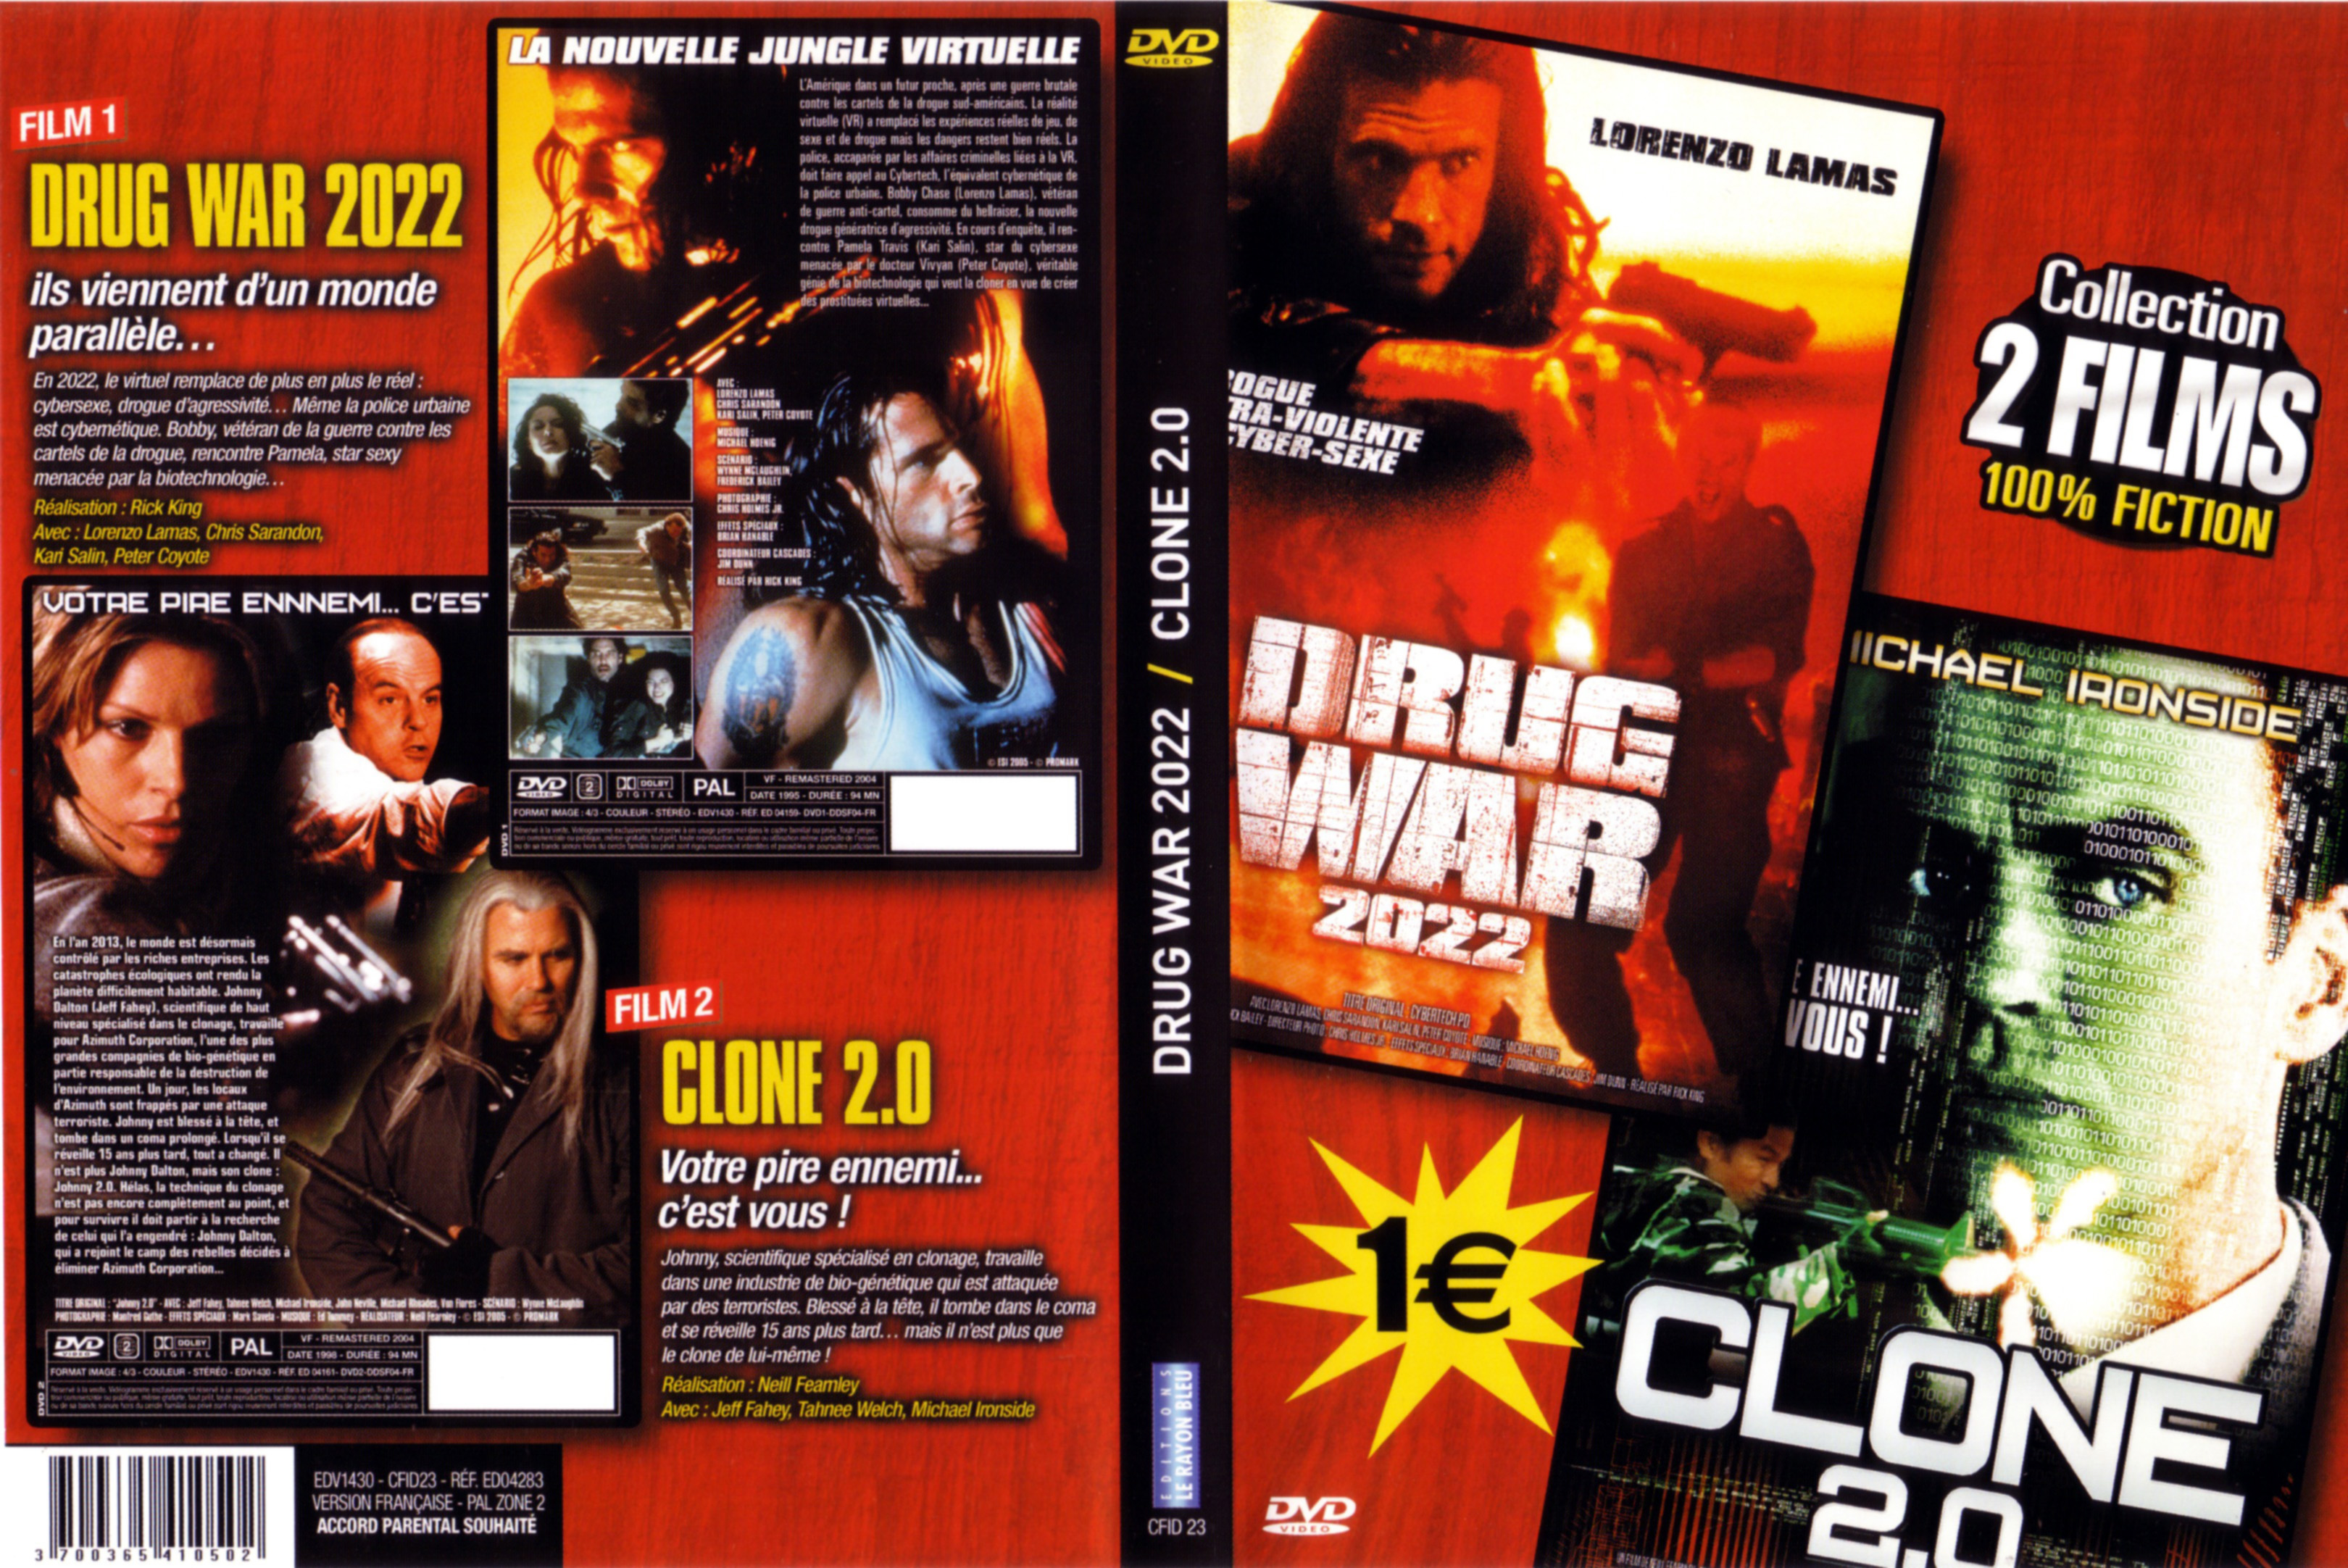 Jaquette DVD Drug war 2022 + Clone 2.0